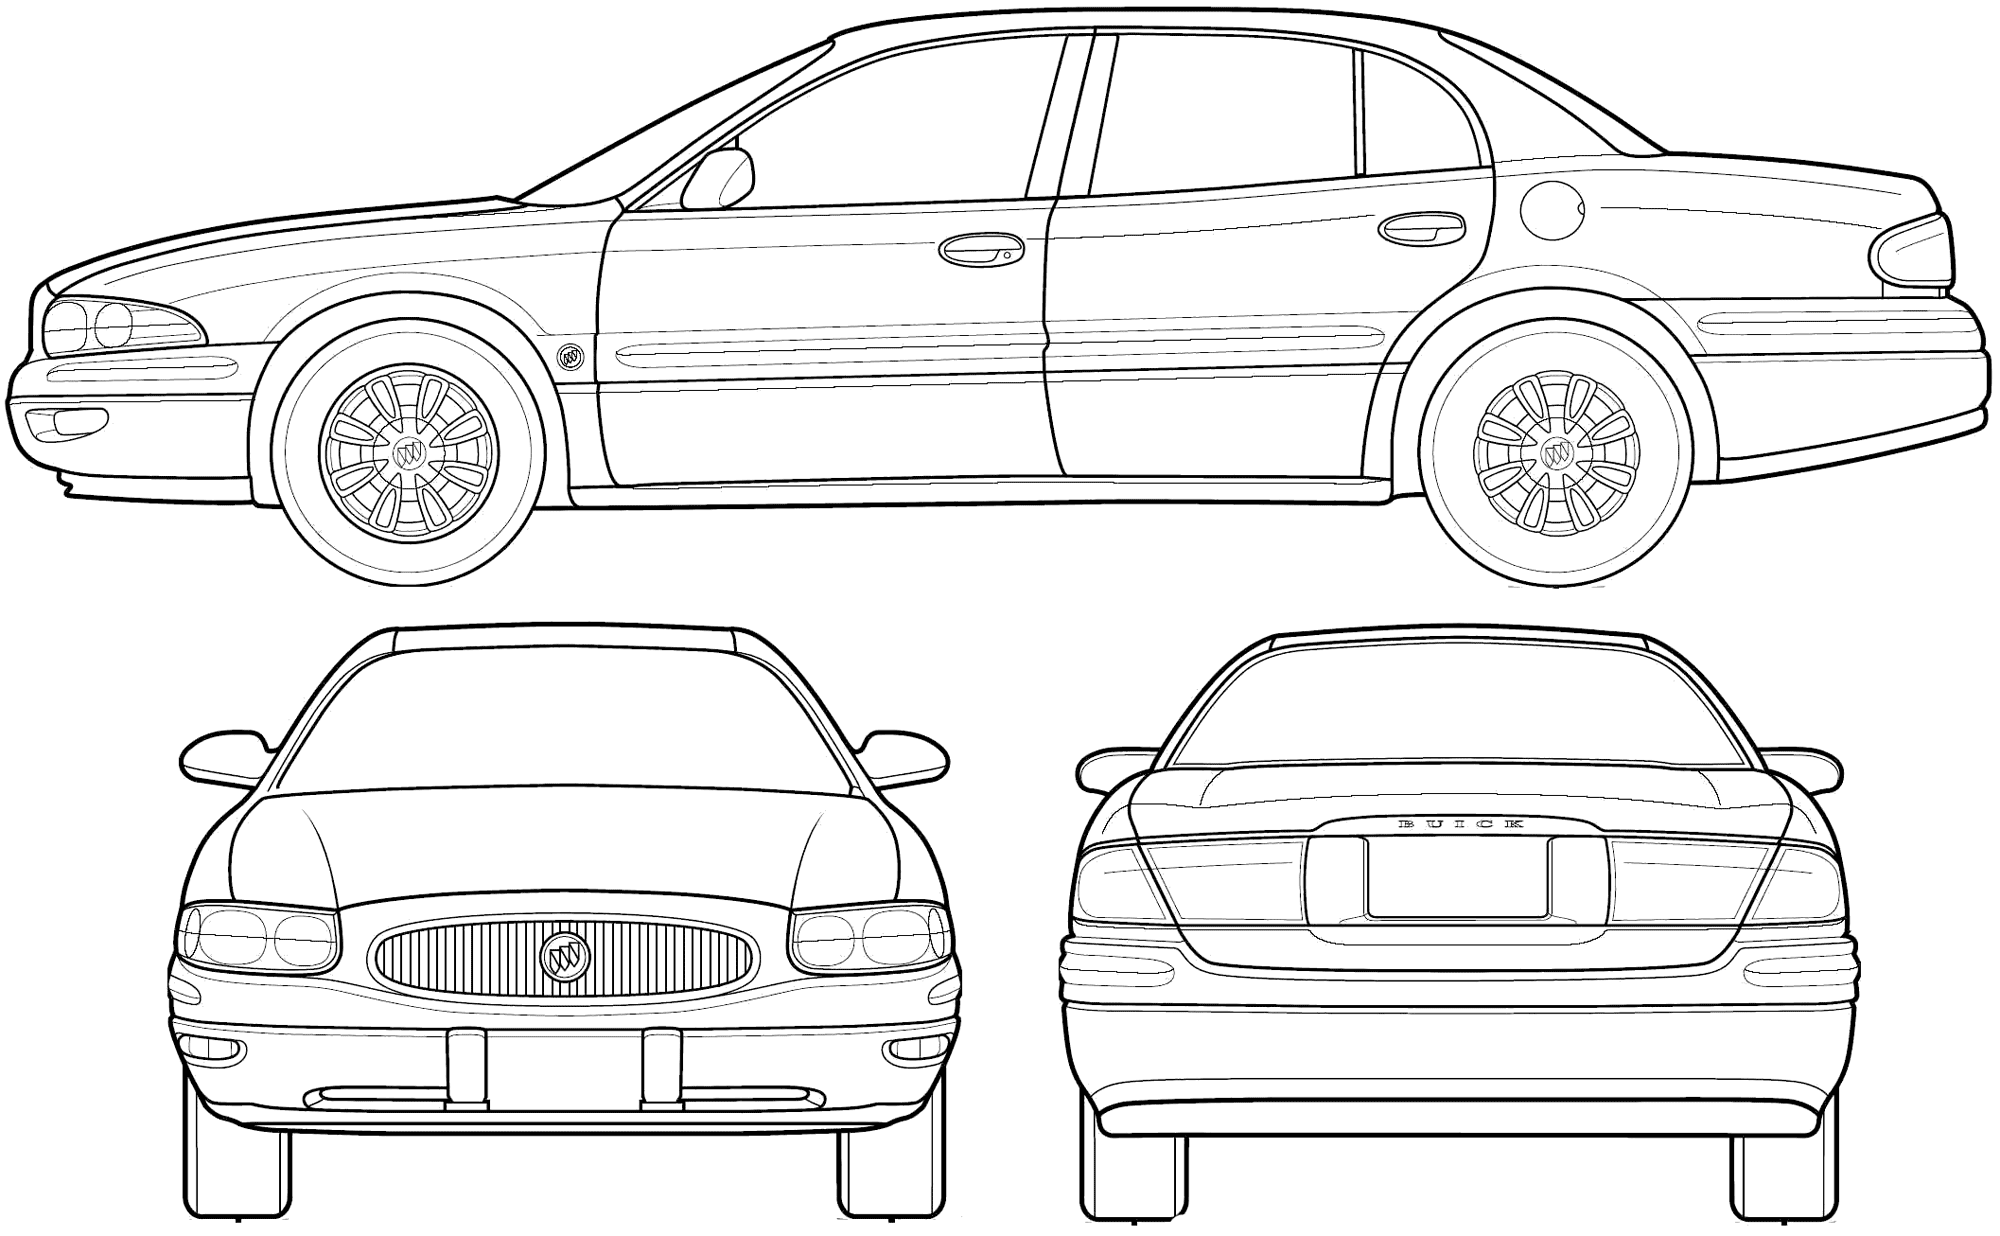 Buick LeSabre blueprint